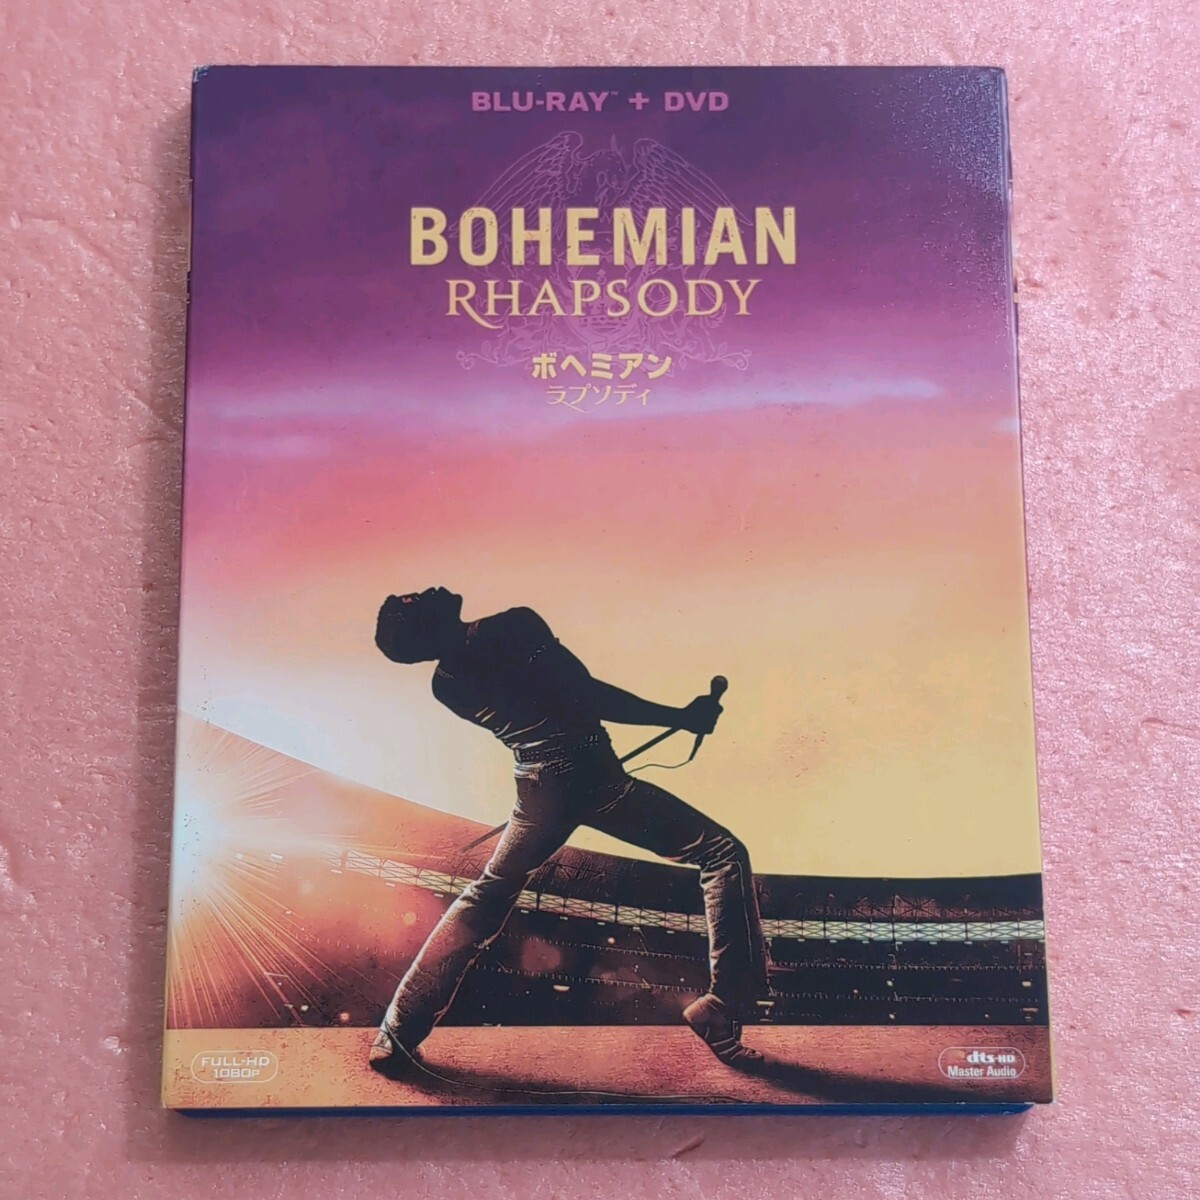 BLU-RAY+DVD ポストカード付 特典映像付 ボヘミアン ラプソディ QUEEN BOHEMIAN RHAPSODY Freddie Mercury フレディ マーキュリー_画像1